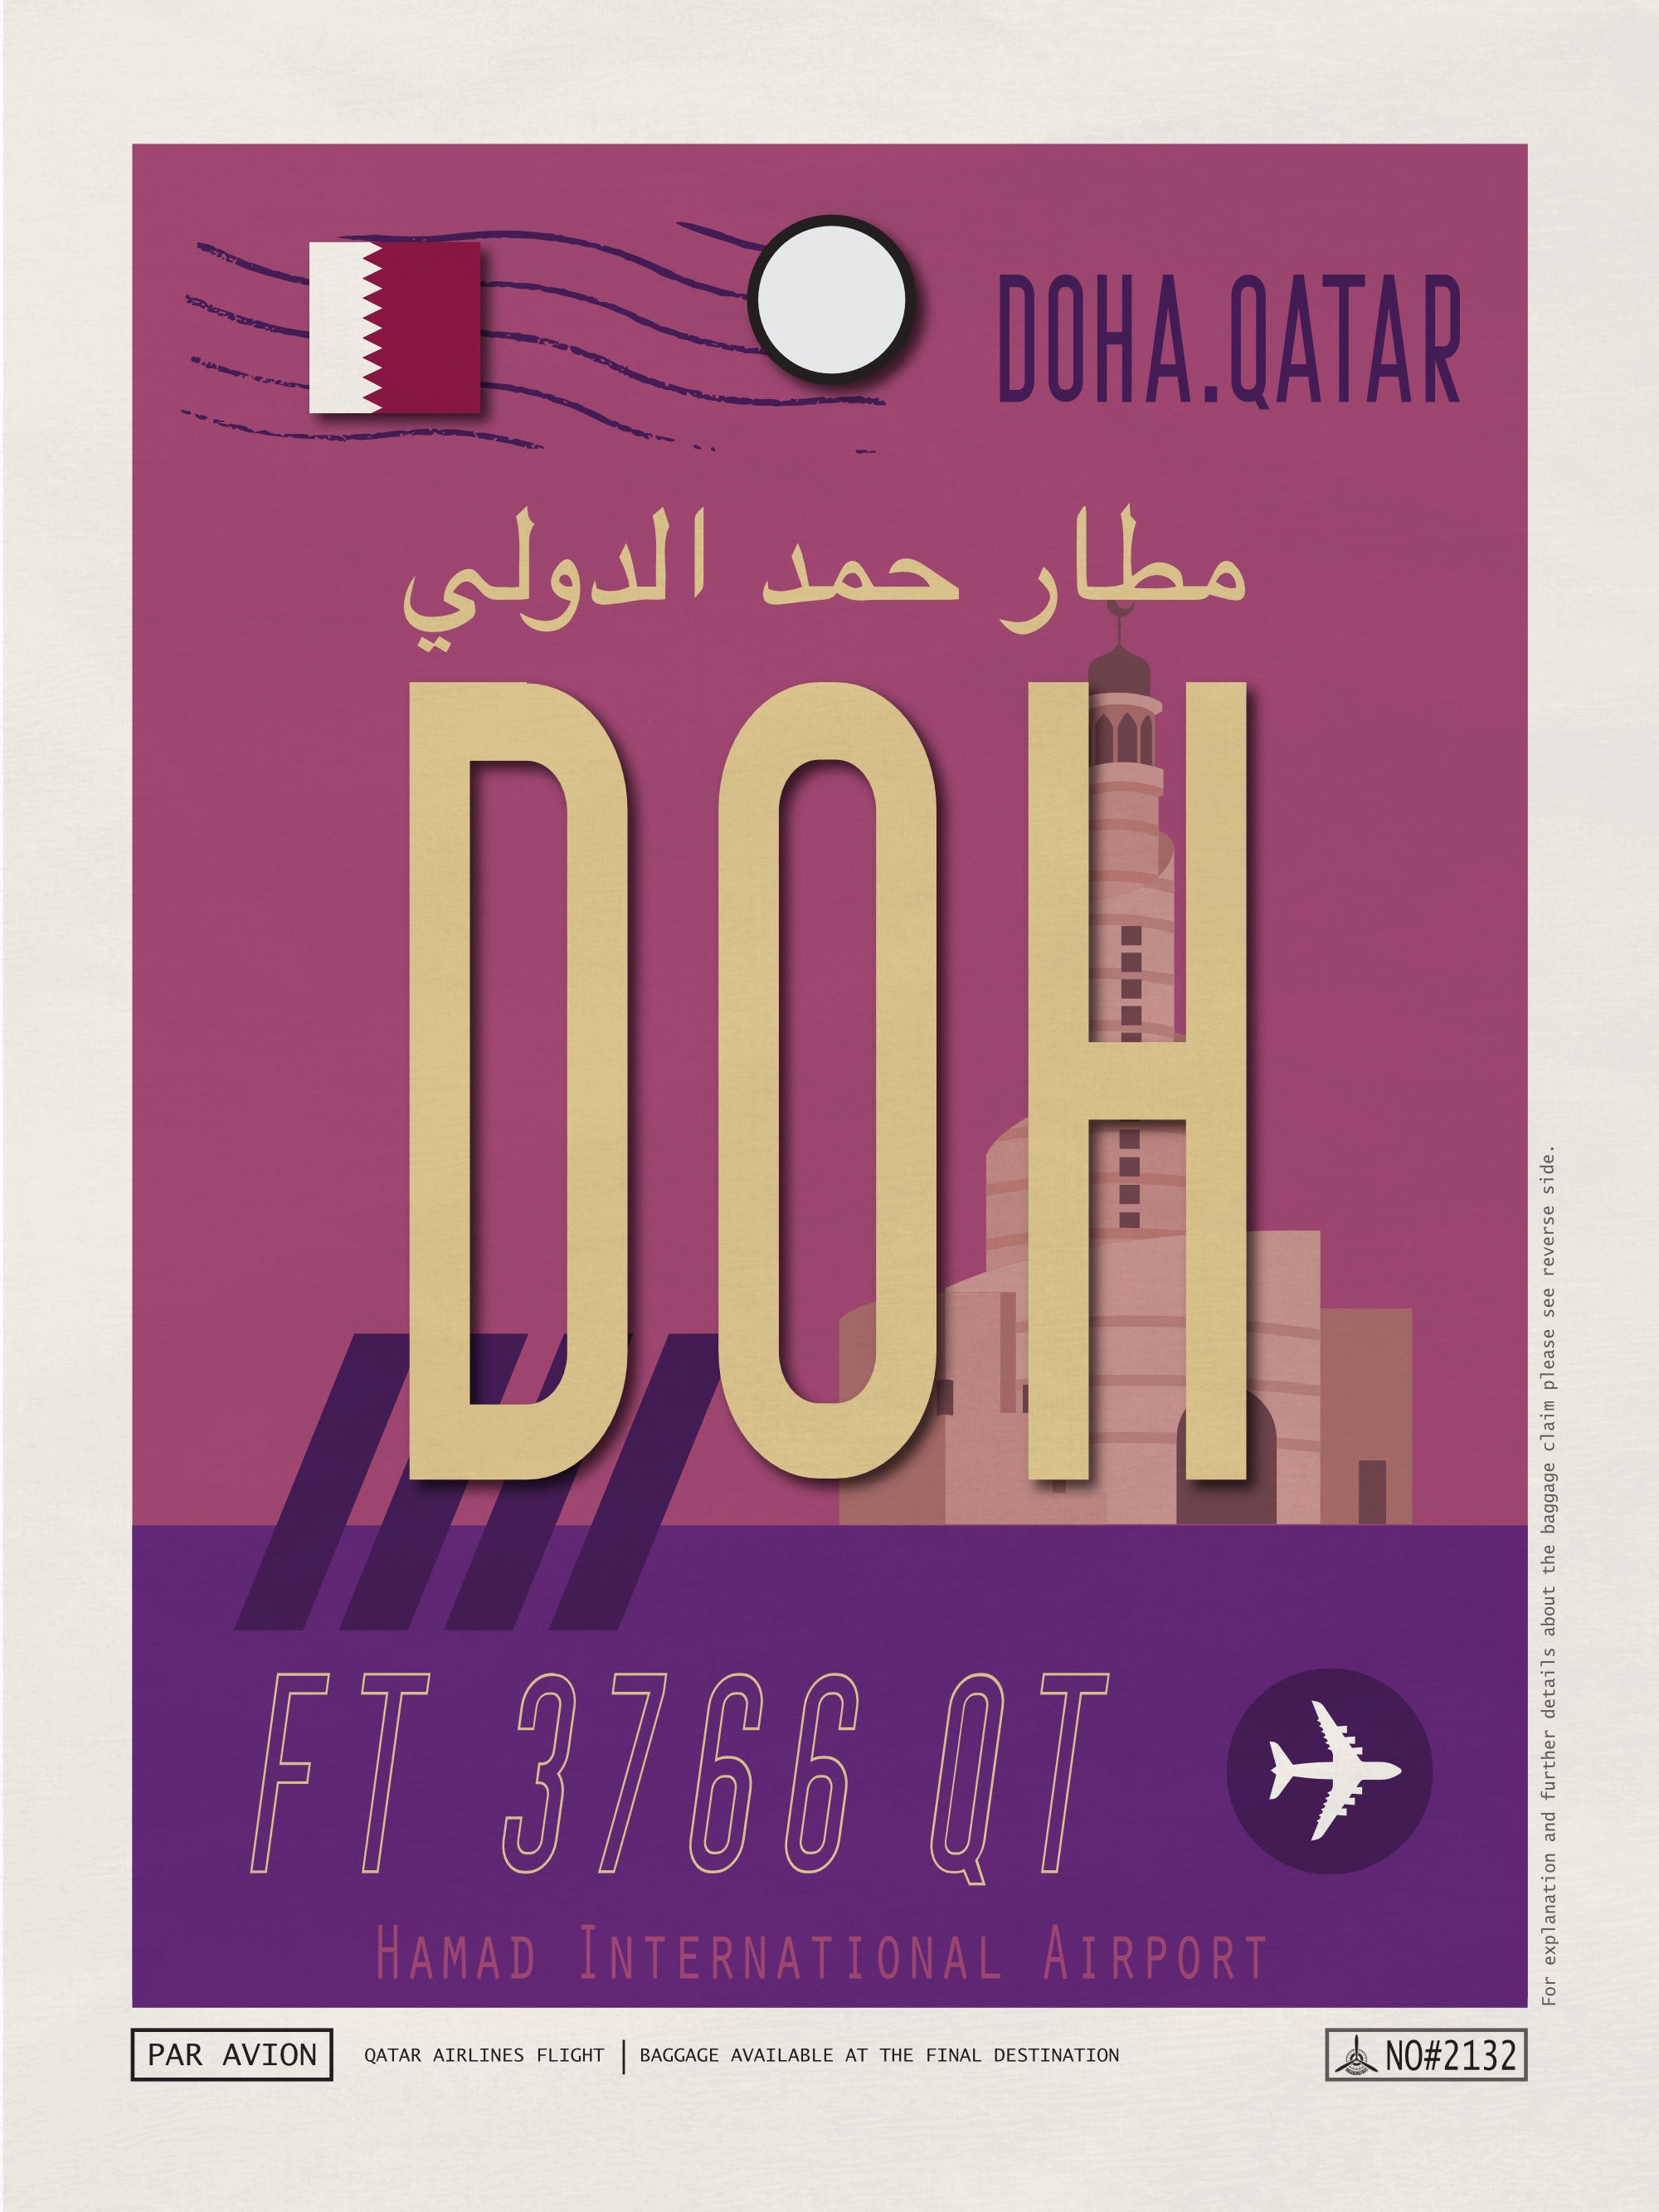 Doha, Qatar - DOH Airport Code Poster